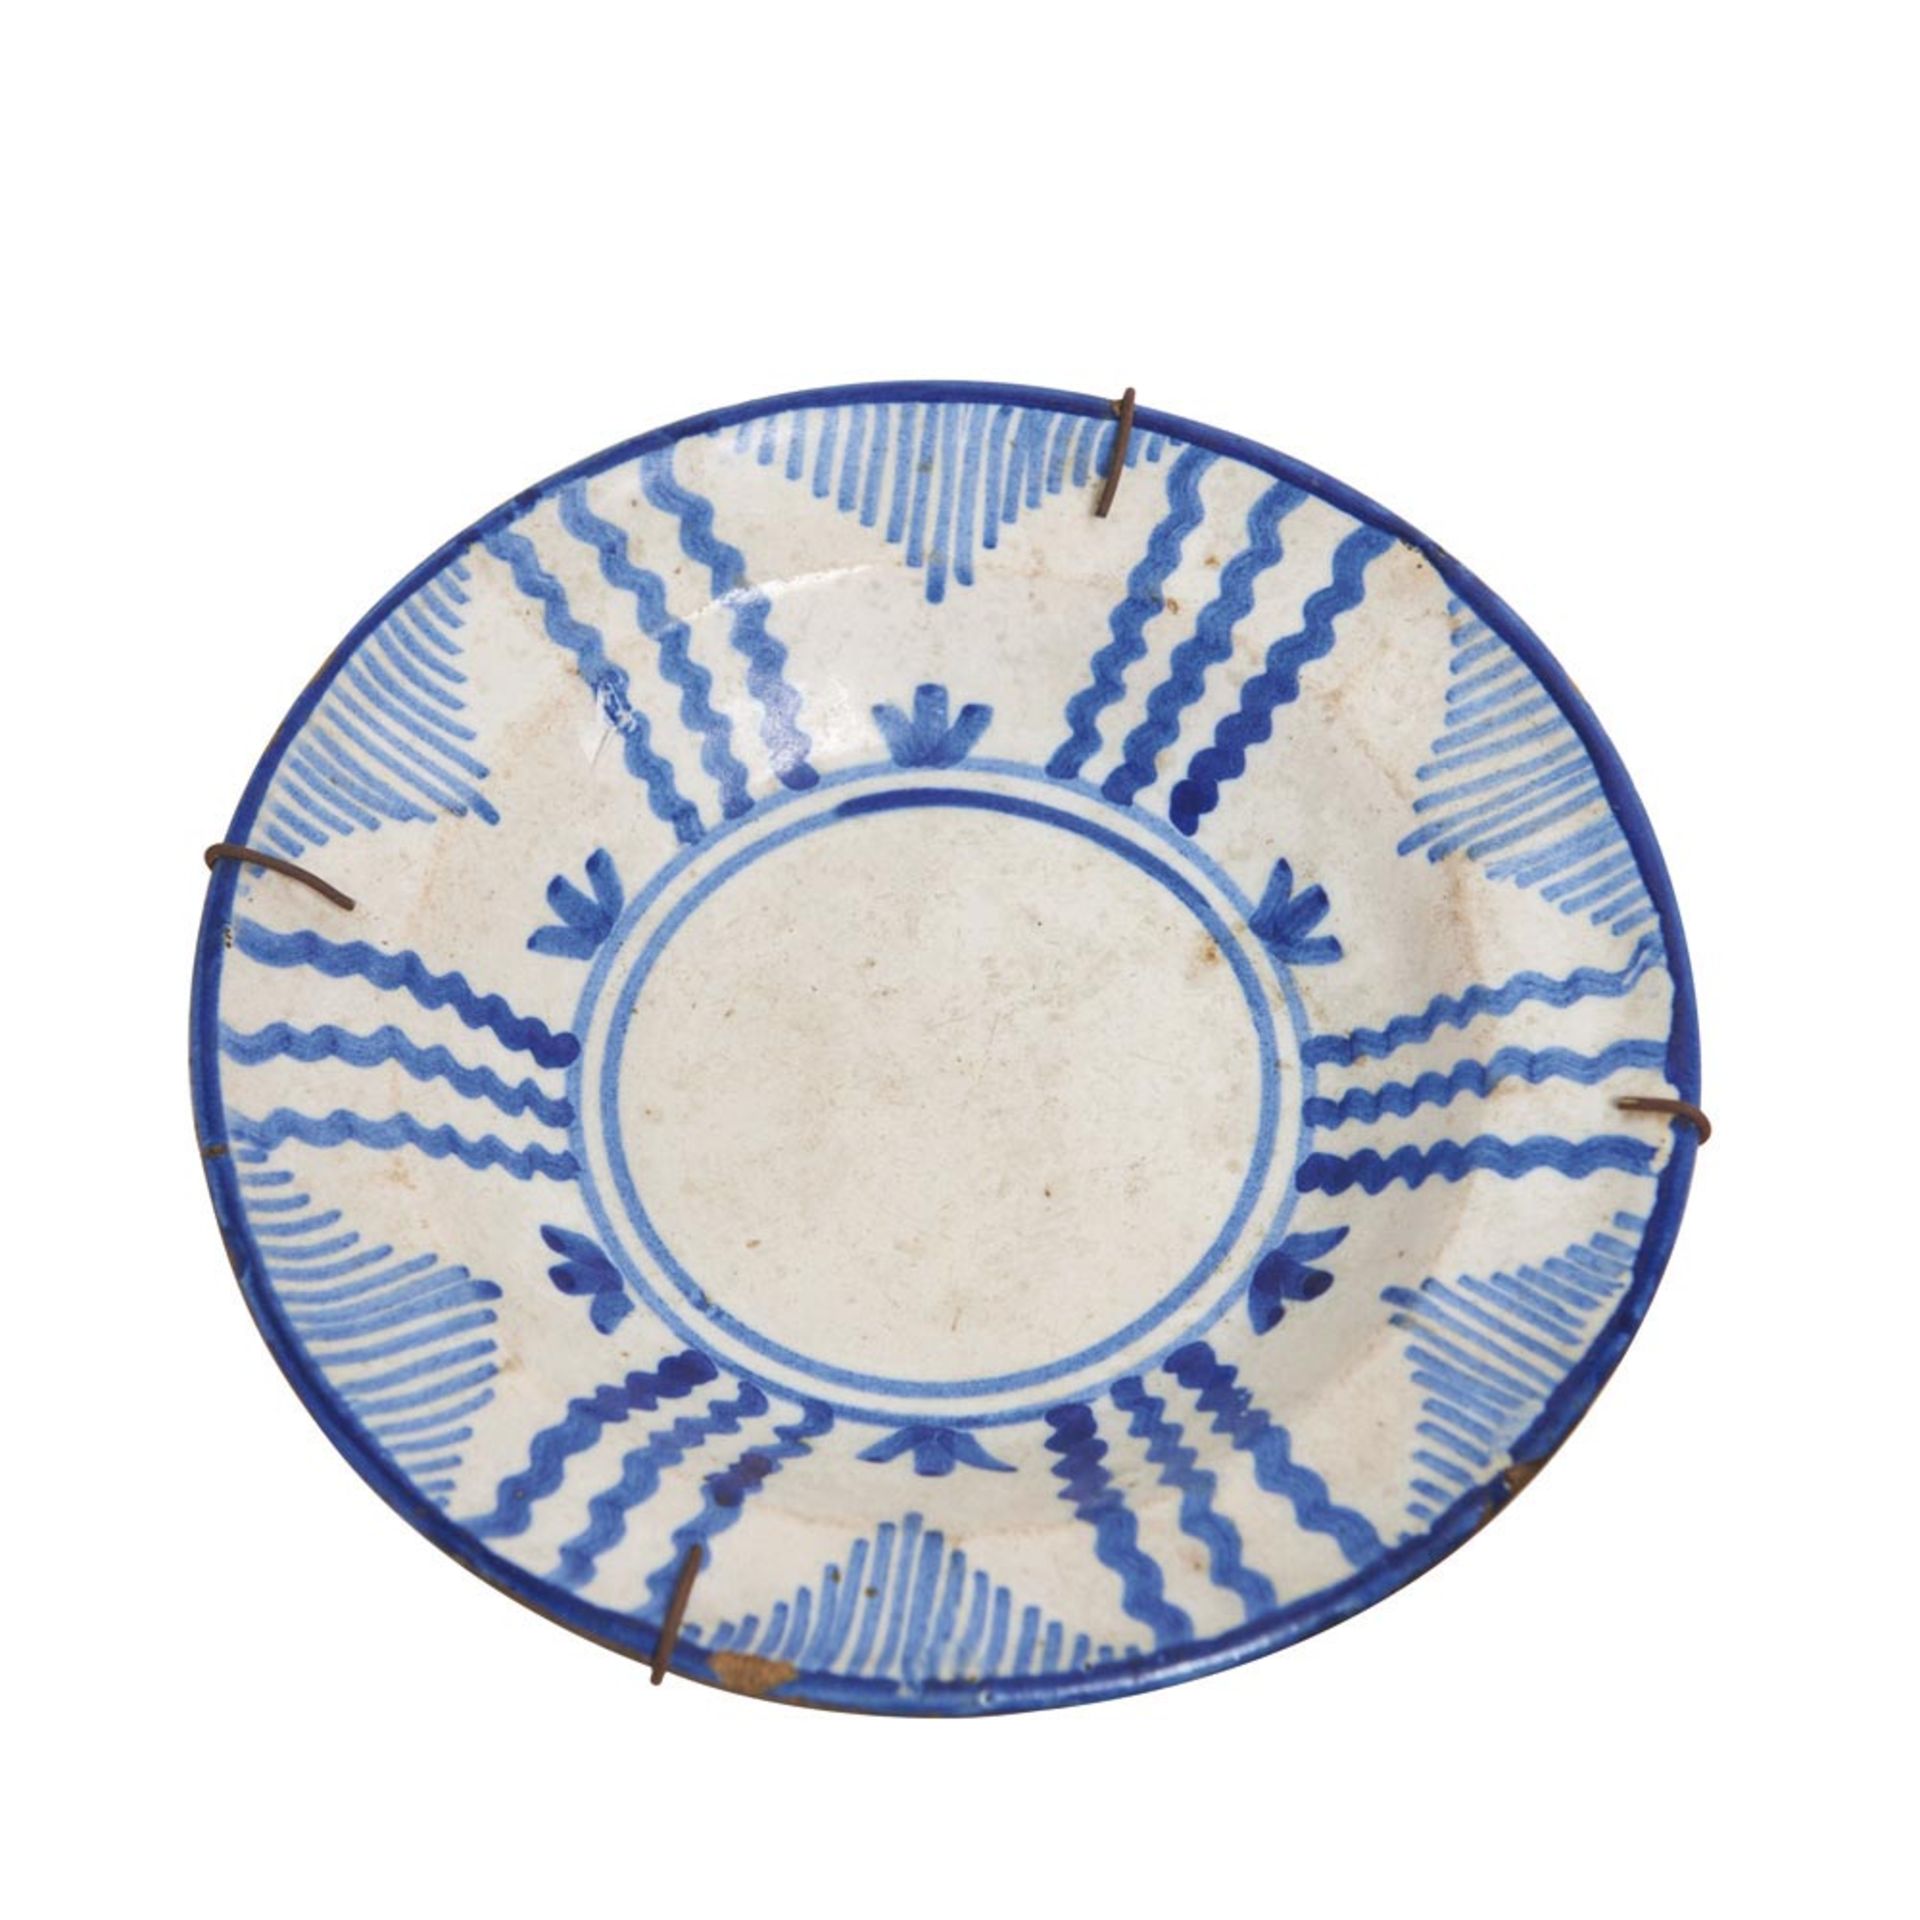 Spanish blue and white glazed ceramic plates 19th century. Plato de Manises en cerámica esmaltada